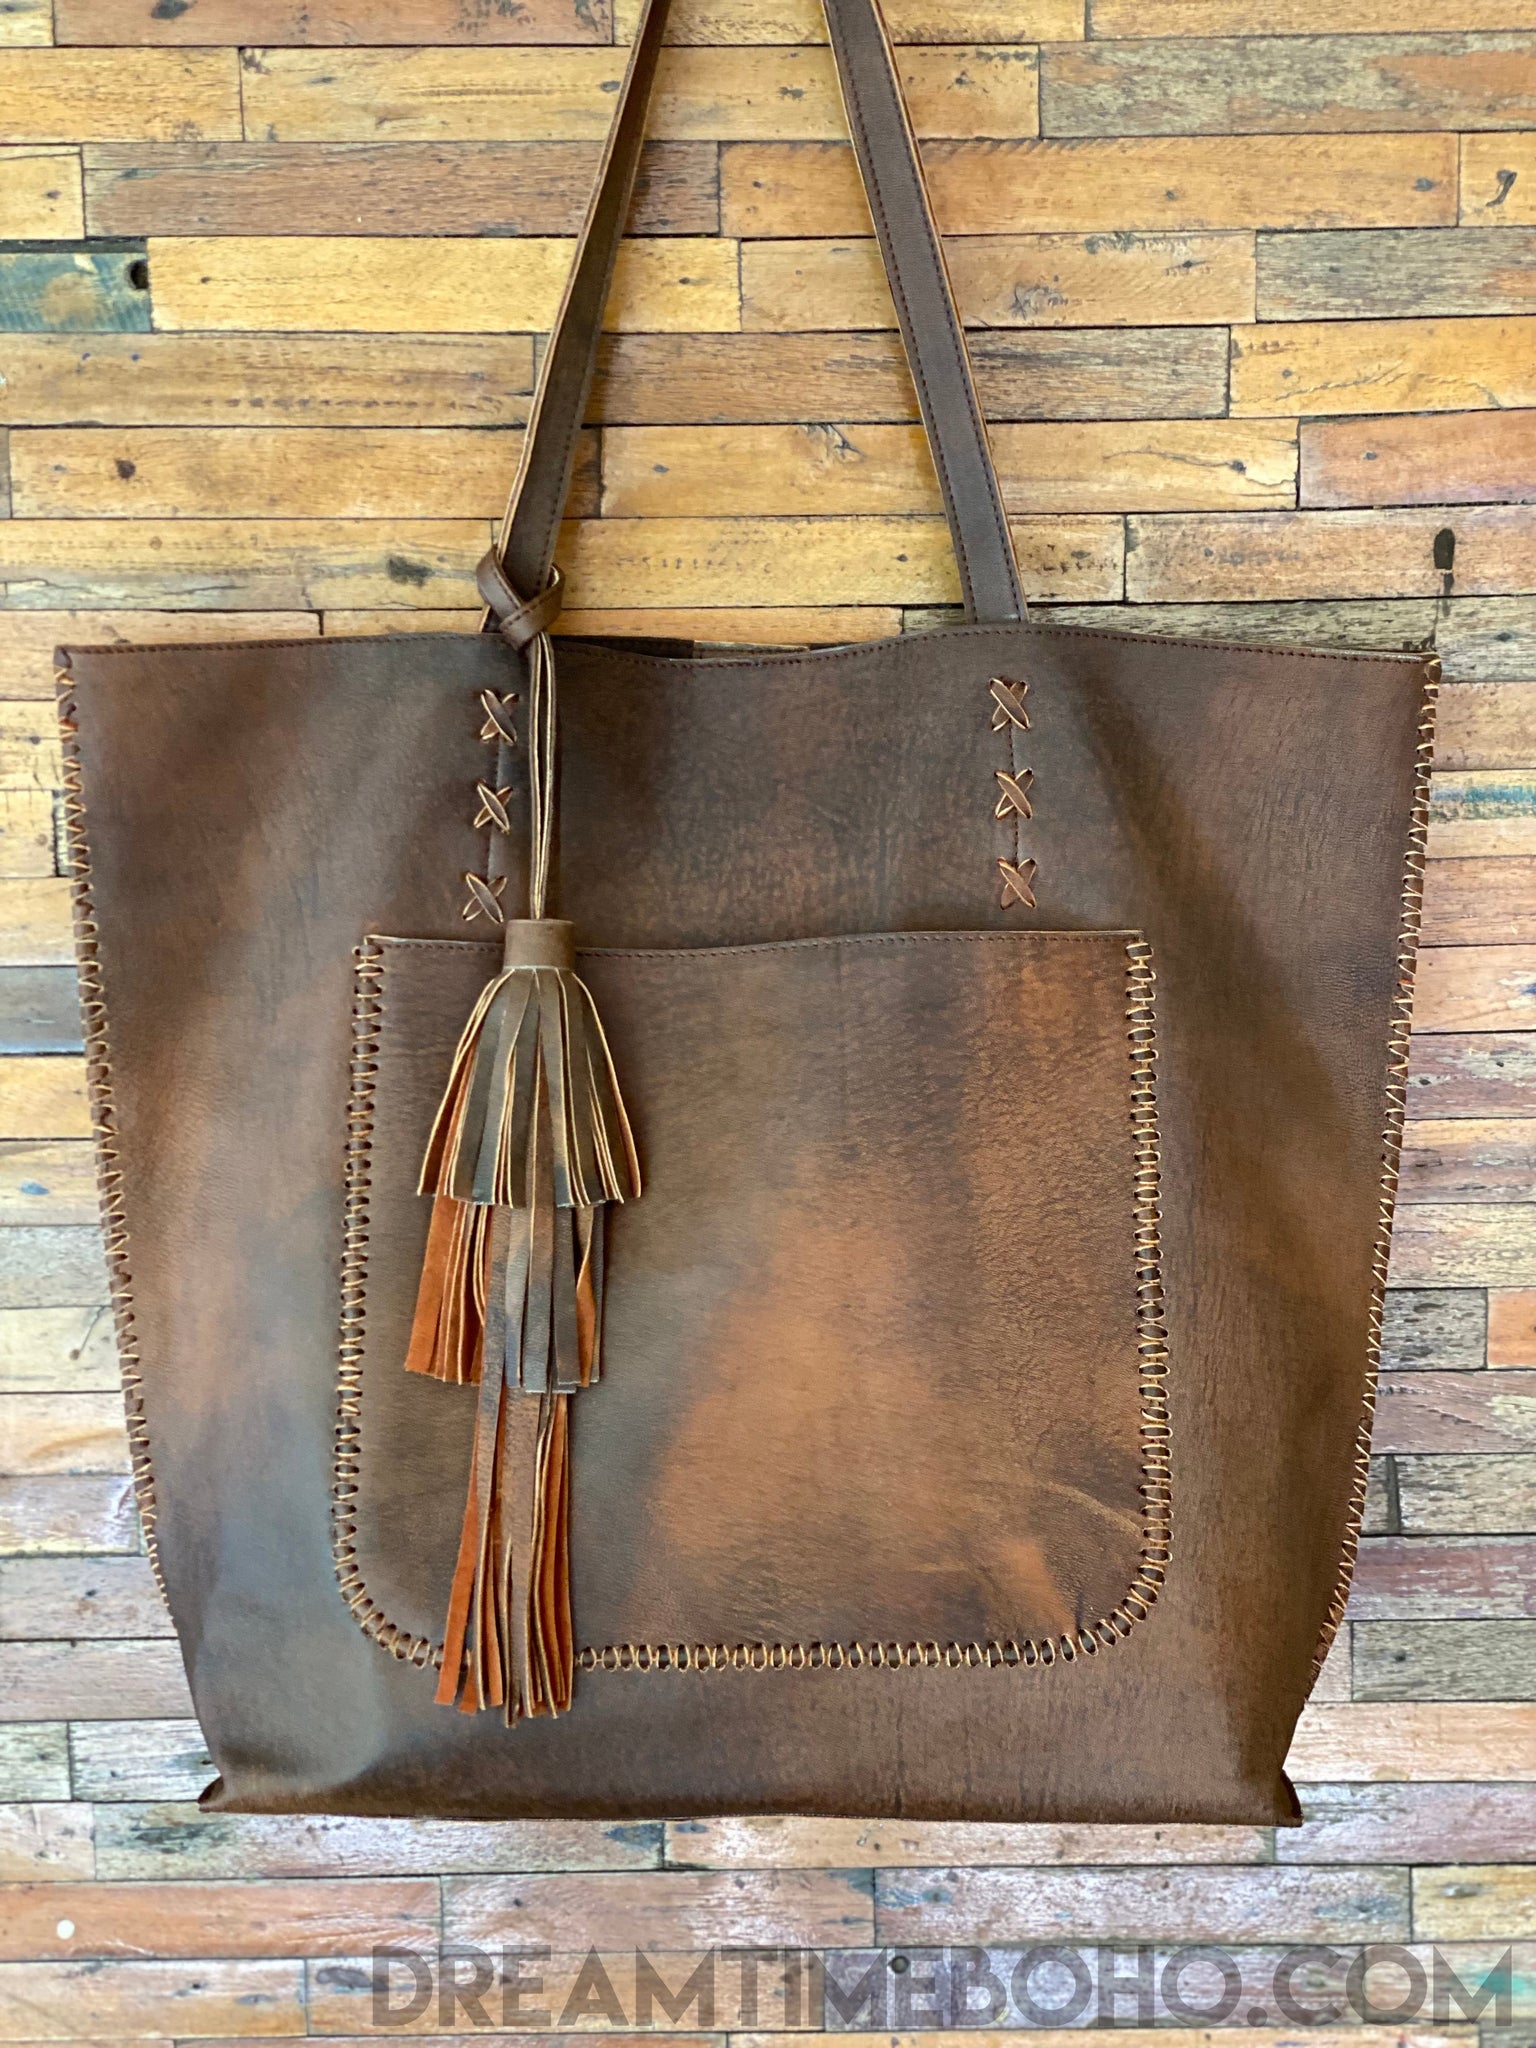 Mandy Woven Crossbody Boho Bag - Antique Brown | Bags by Seminyak Leather Bali Small (18 x 20 x 11 cm)